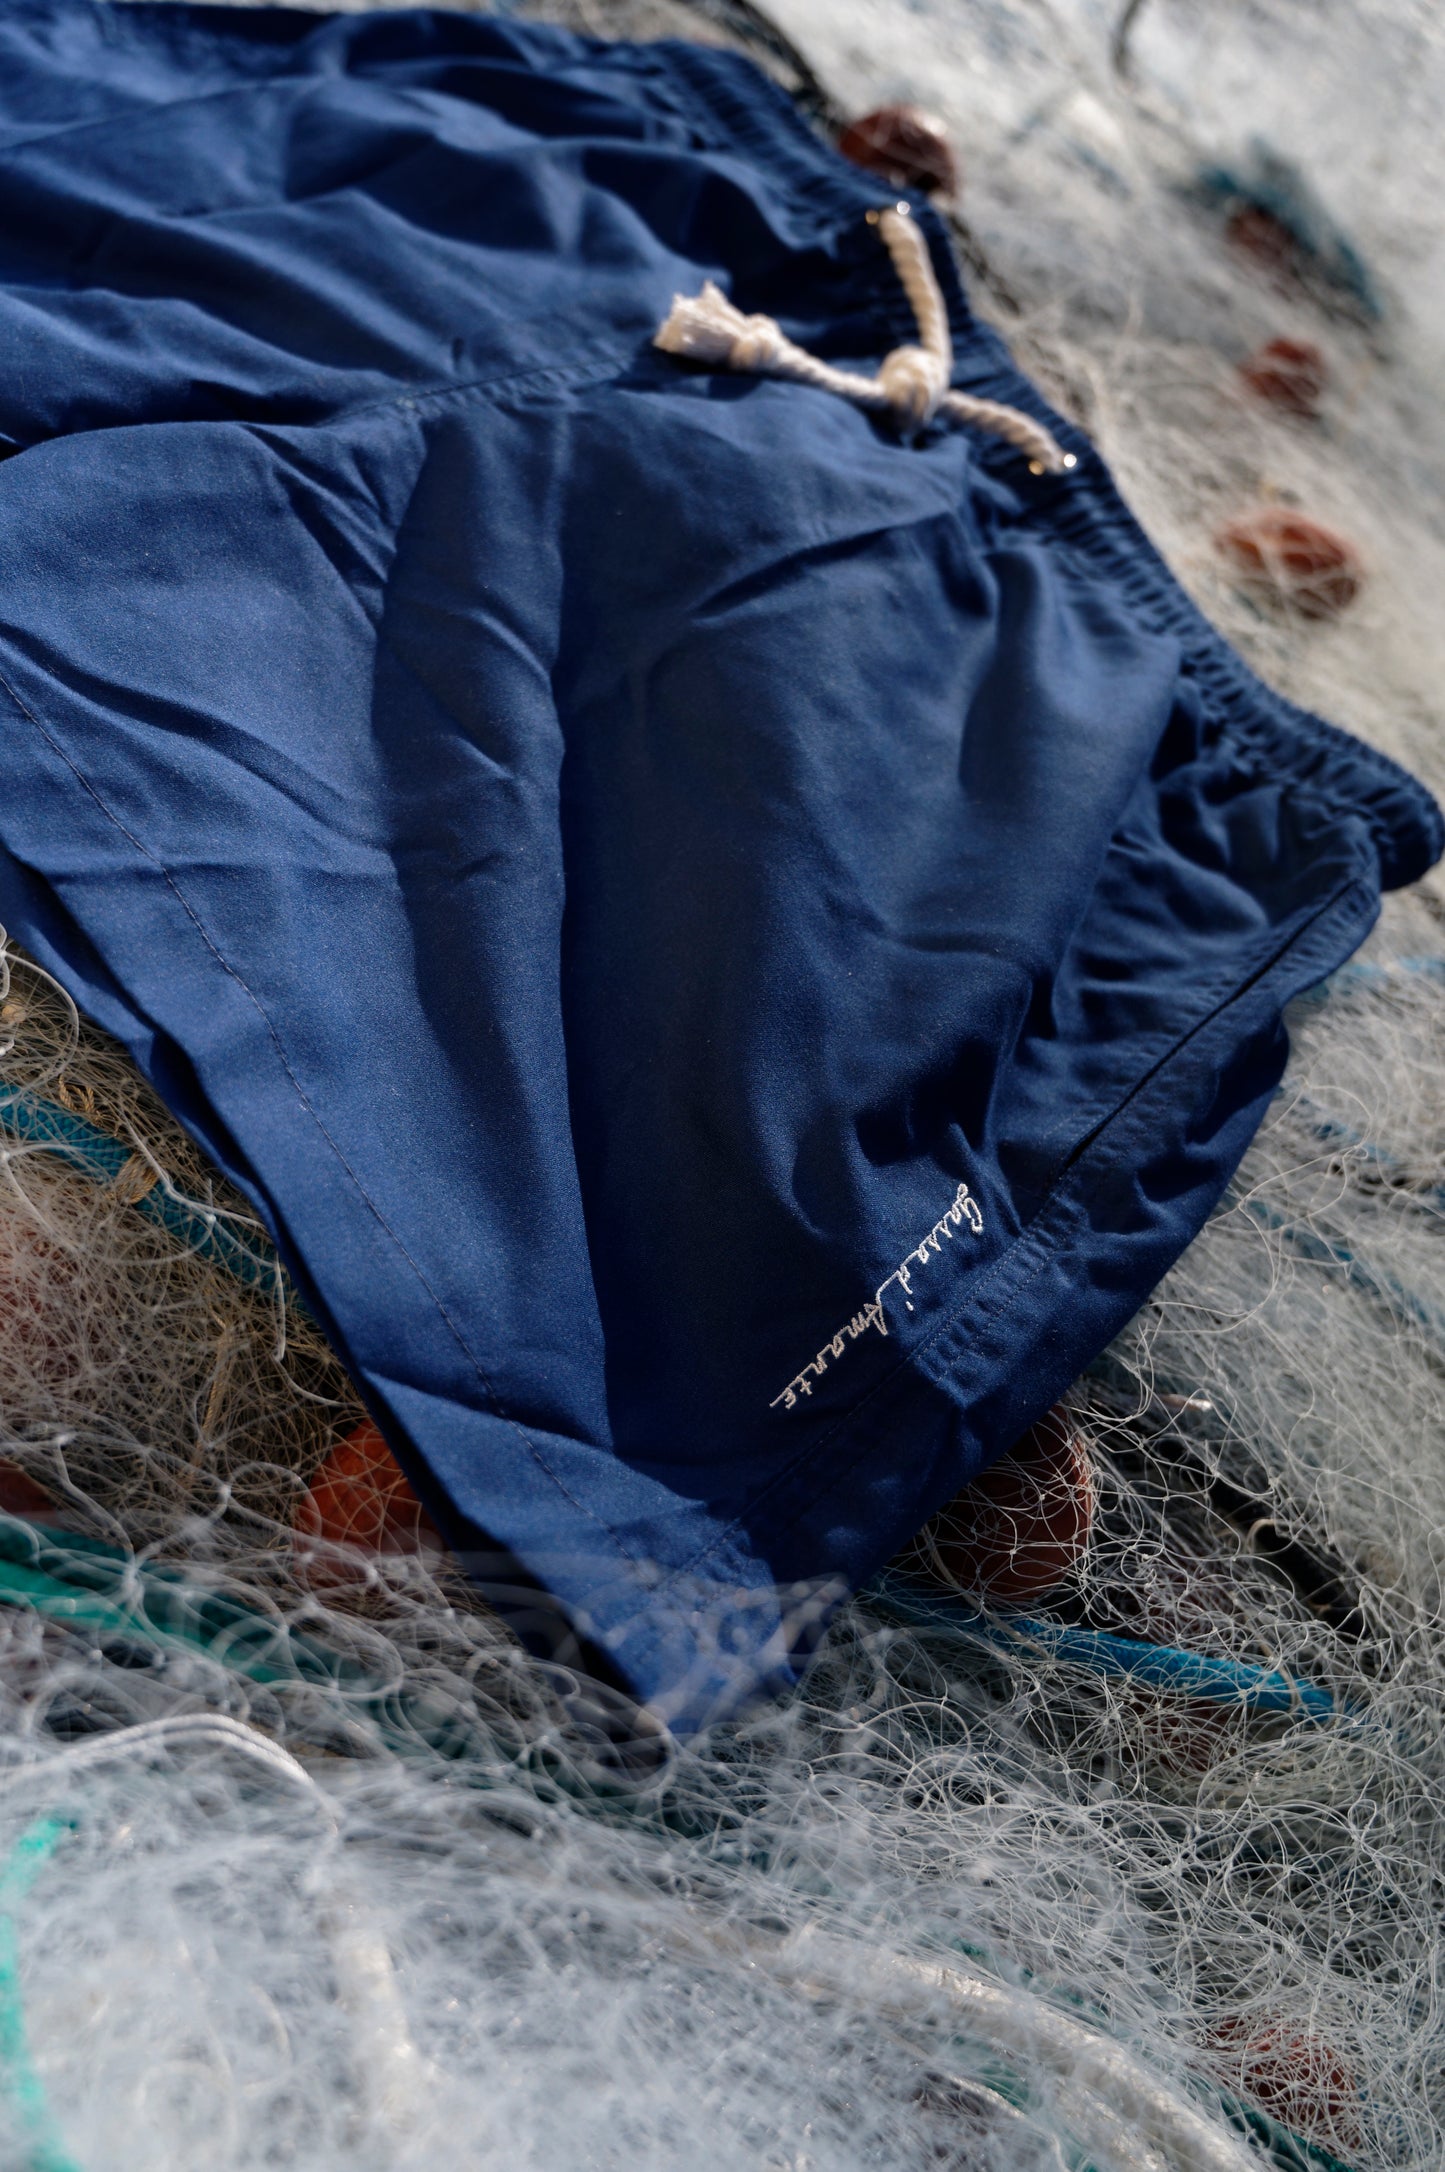 Sustainable Men's Swimsuit - Forte dei Marmi Blu